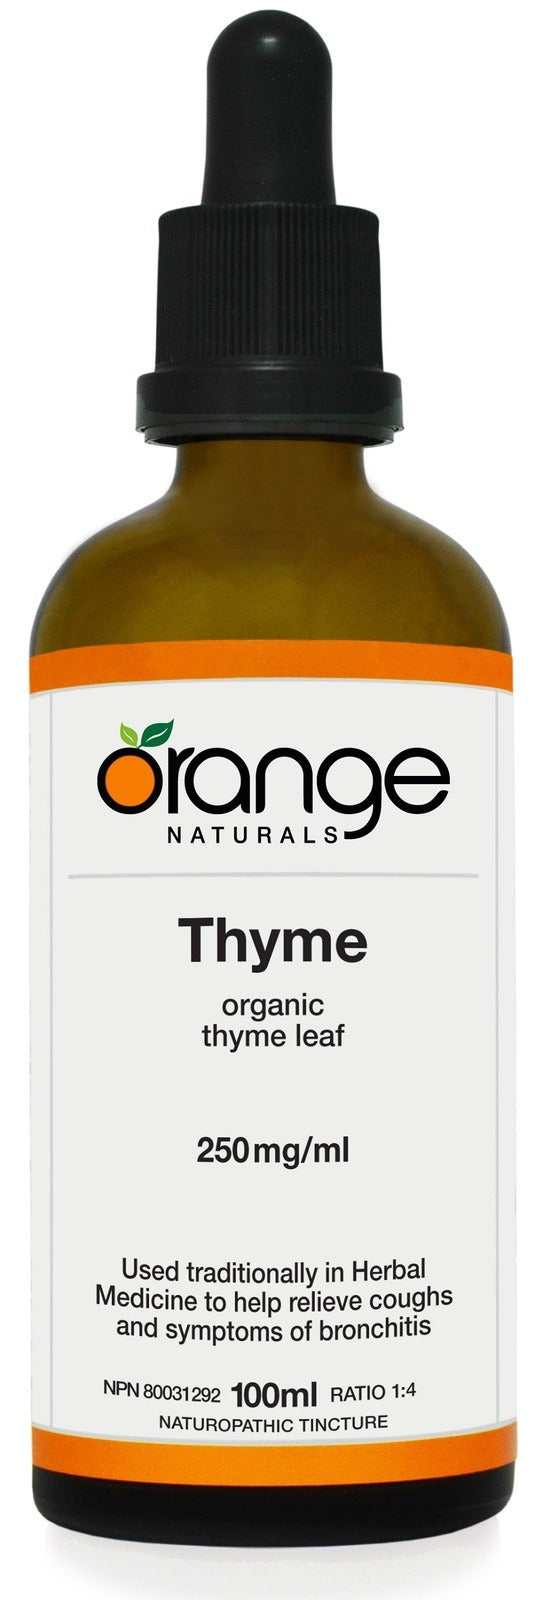 Orange Naturals Thyme 250 mg/mL 100 mL Image 1